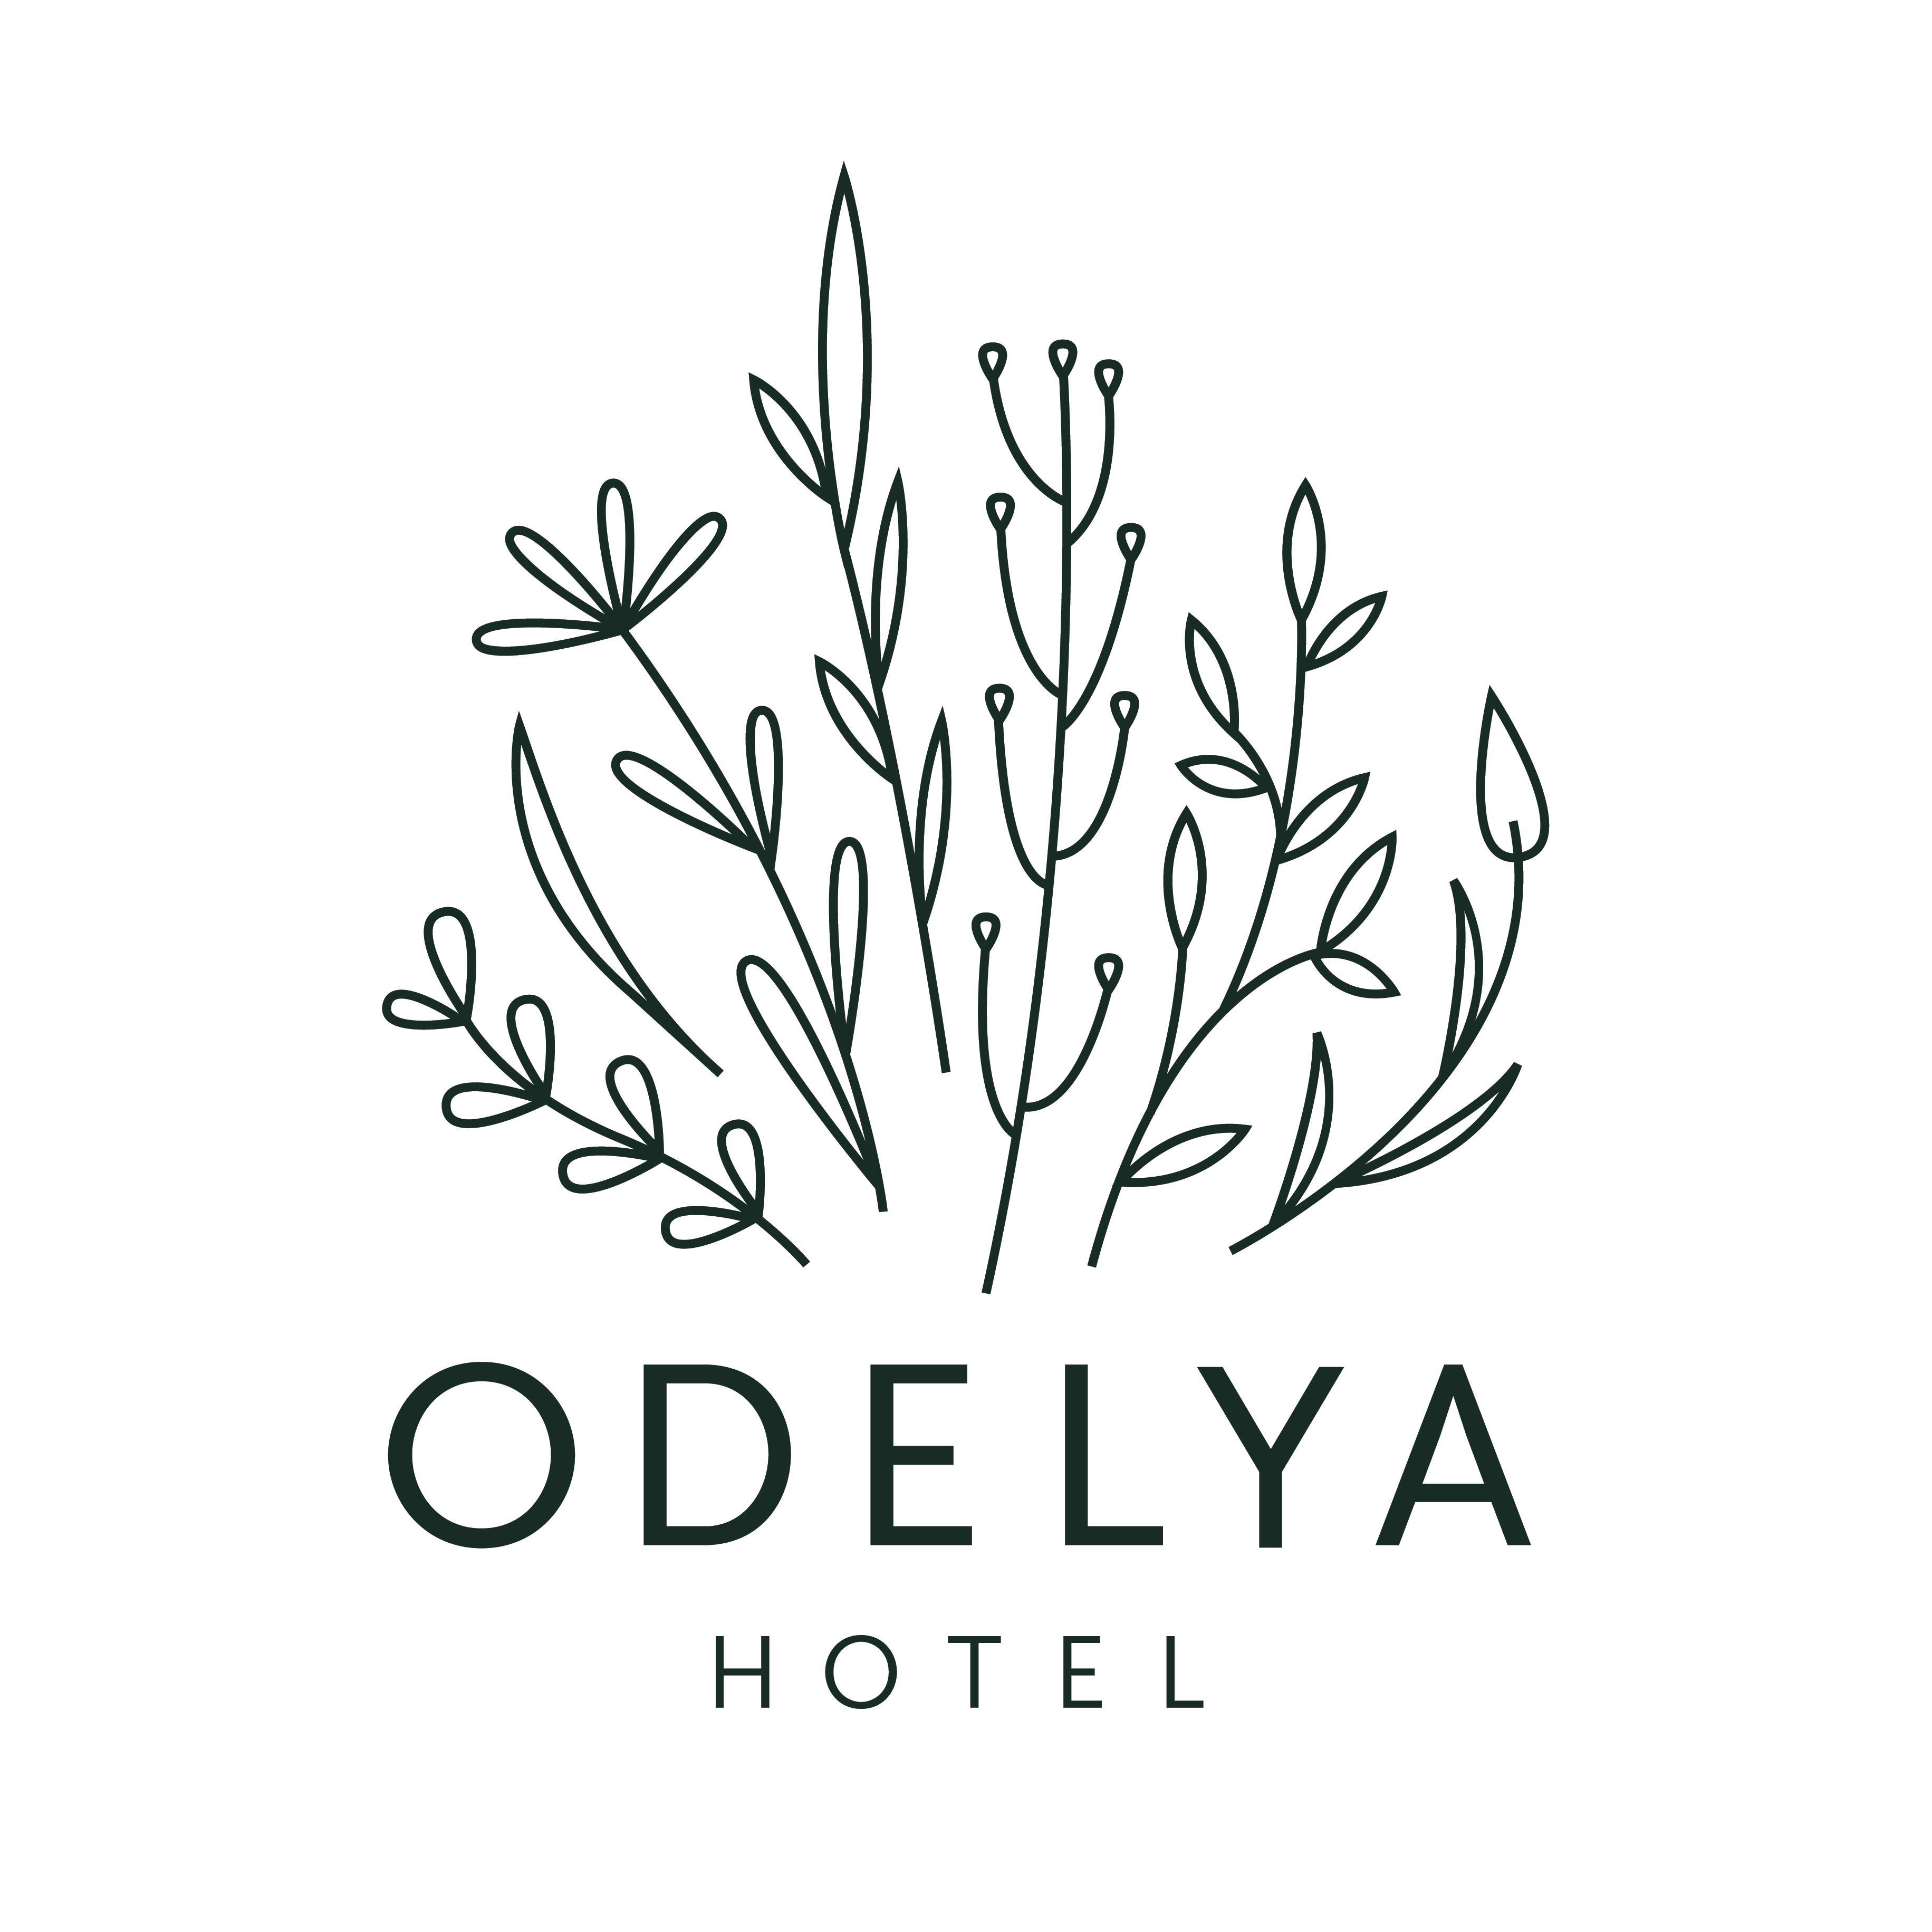 Hotel Odelya - Hotel - Basel - 061 260 21 21 Switzerland | ShowMeLocal.com